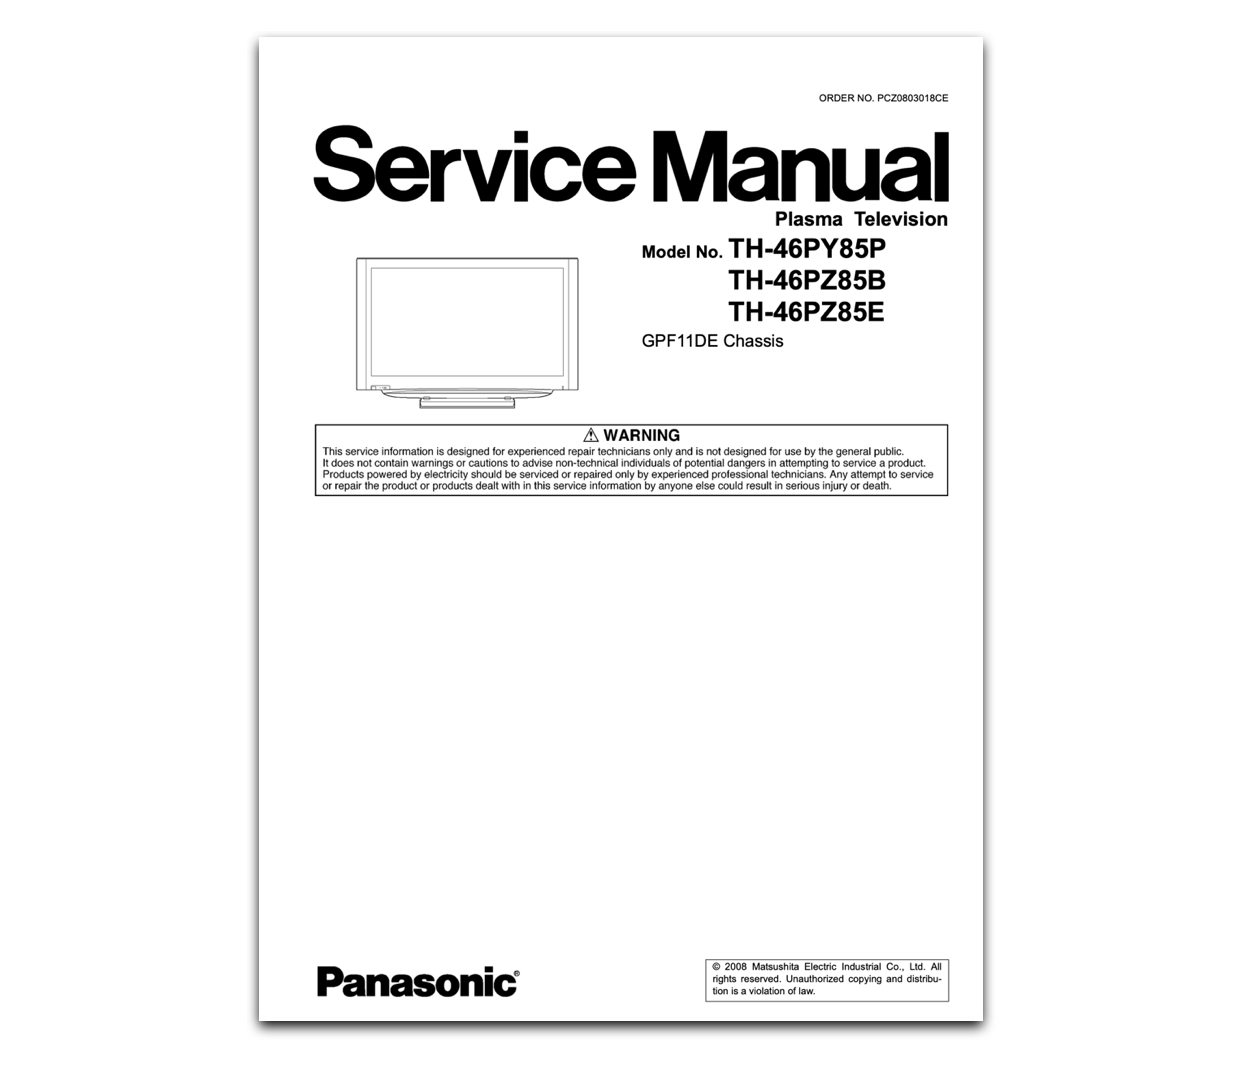 Panasonic TH-46PY85 Service Manual Complete